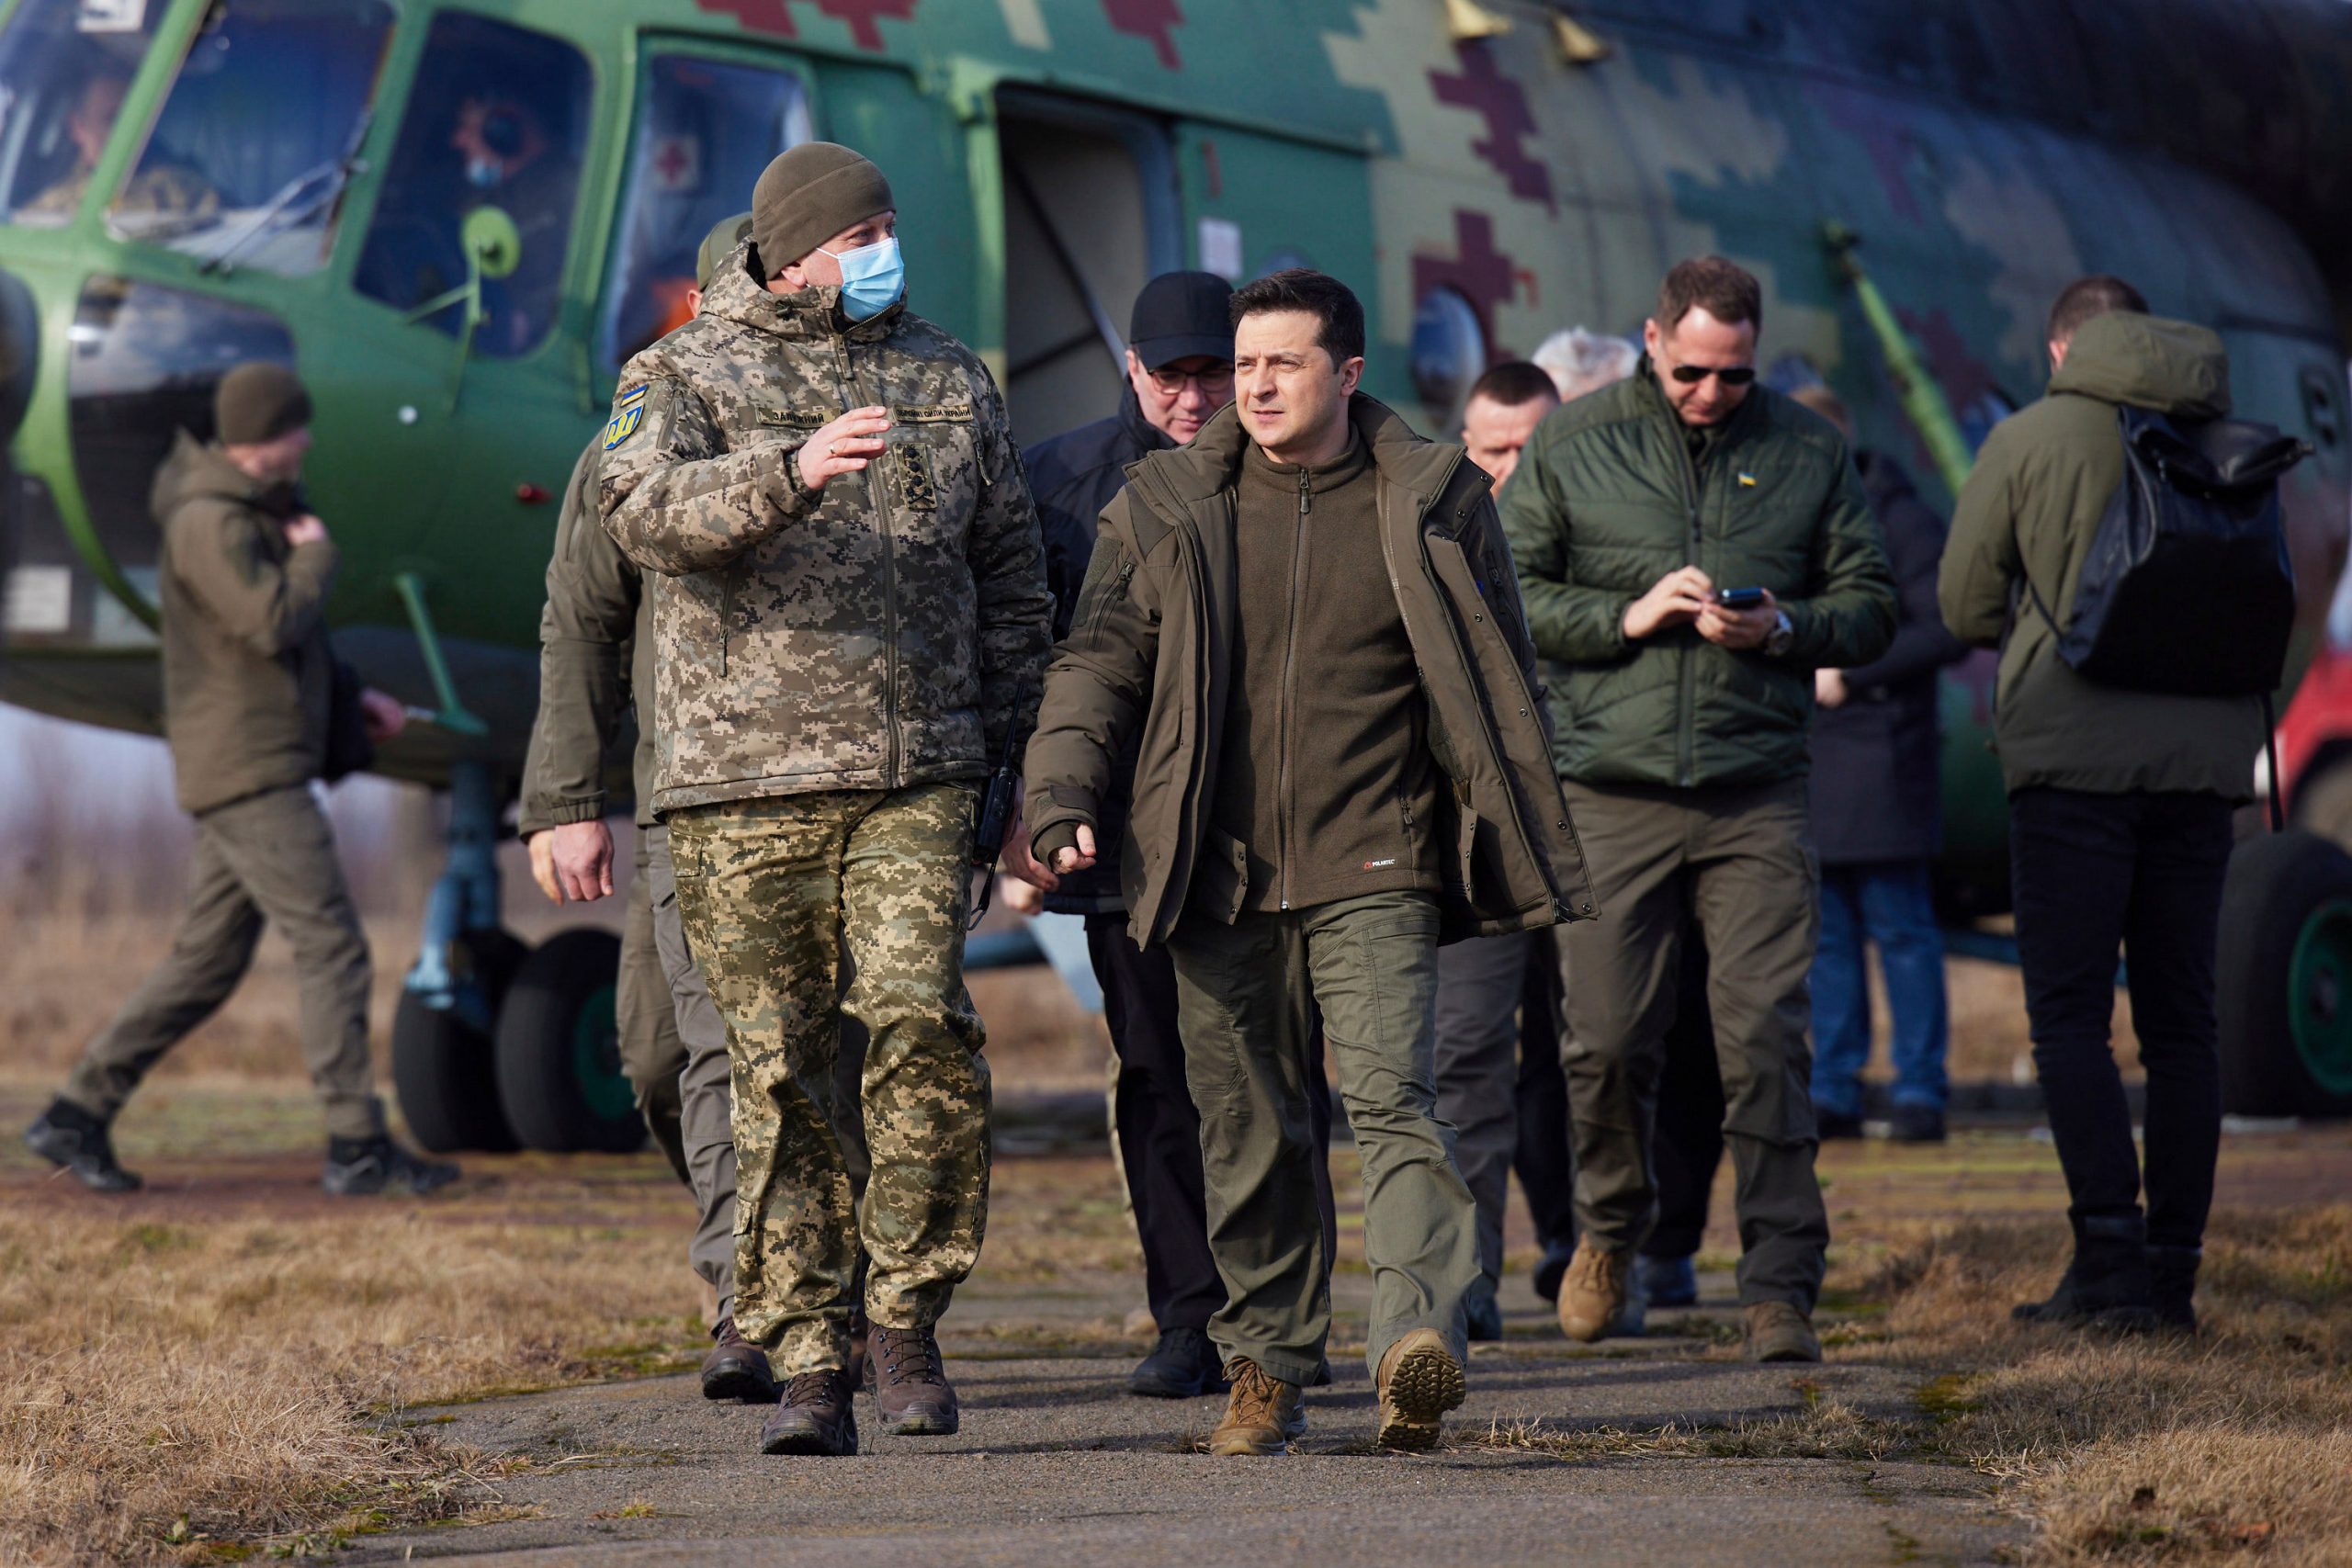 Ukraine president Volodymyr Zelensky tells Russia ‘it is time to talk’